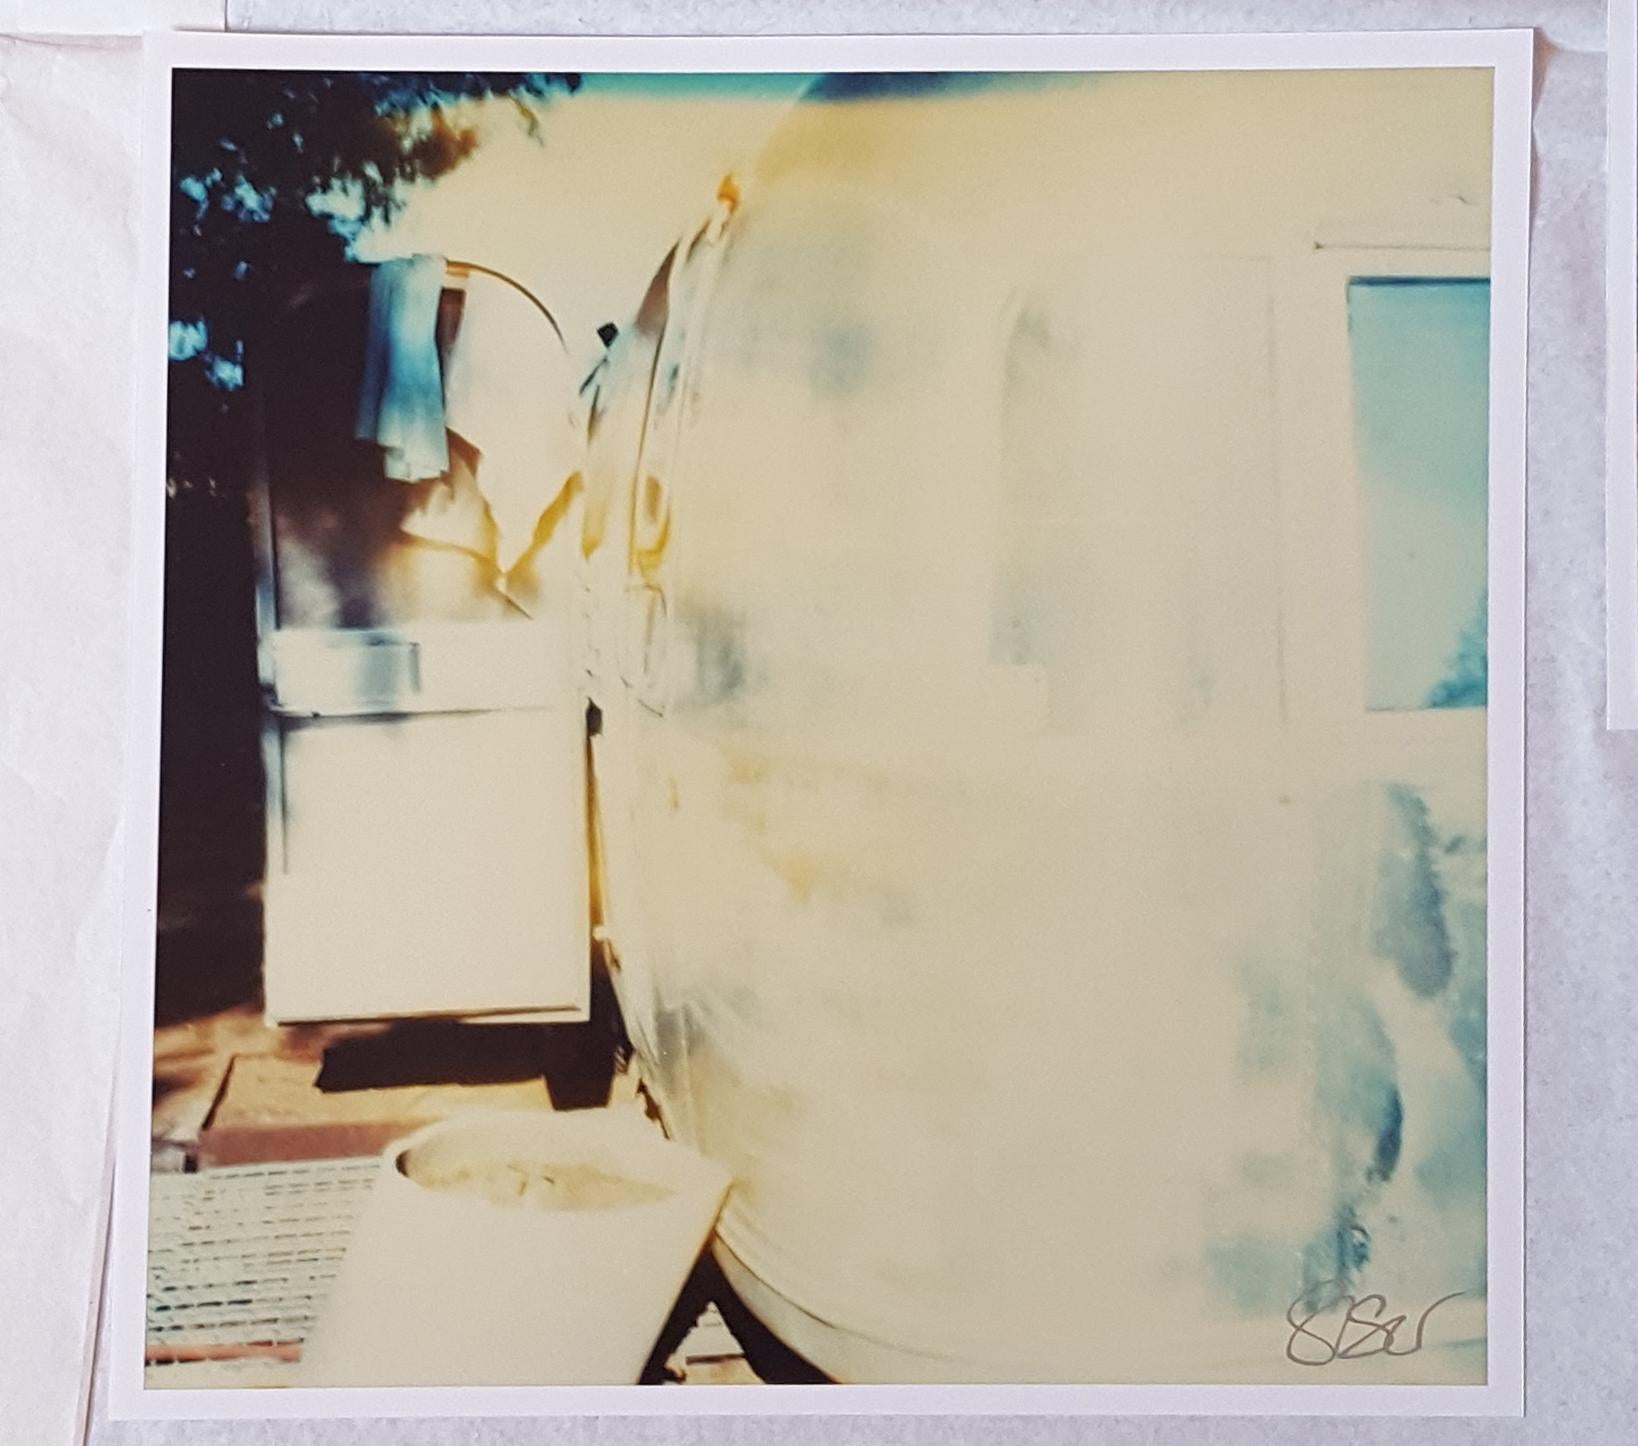 Robe bleue - partie III (Sidewinder) - basée sur un Polaroid Original - Proof